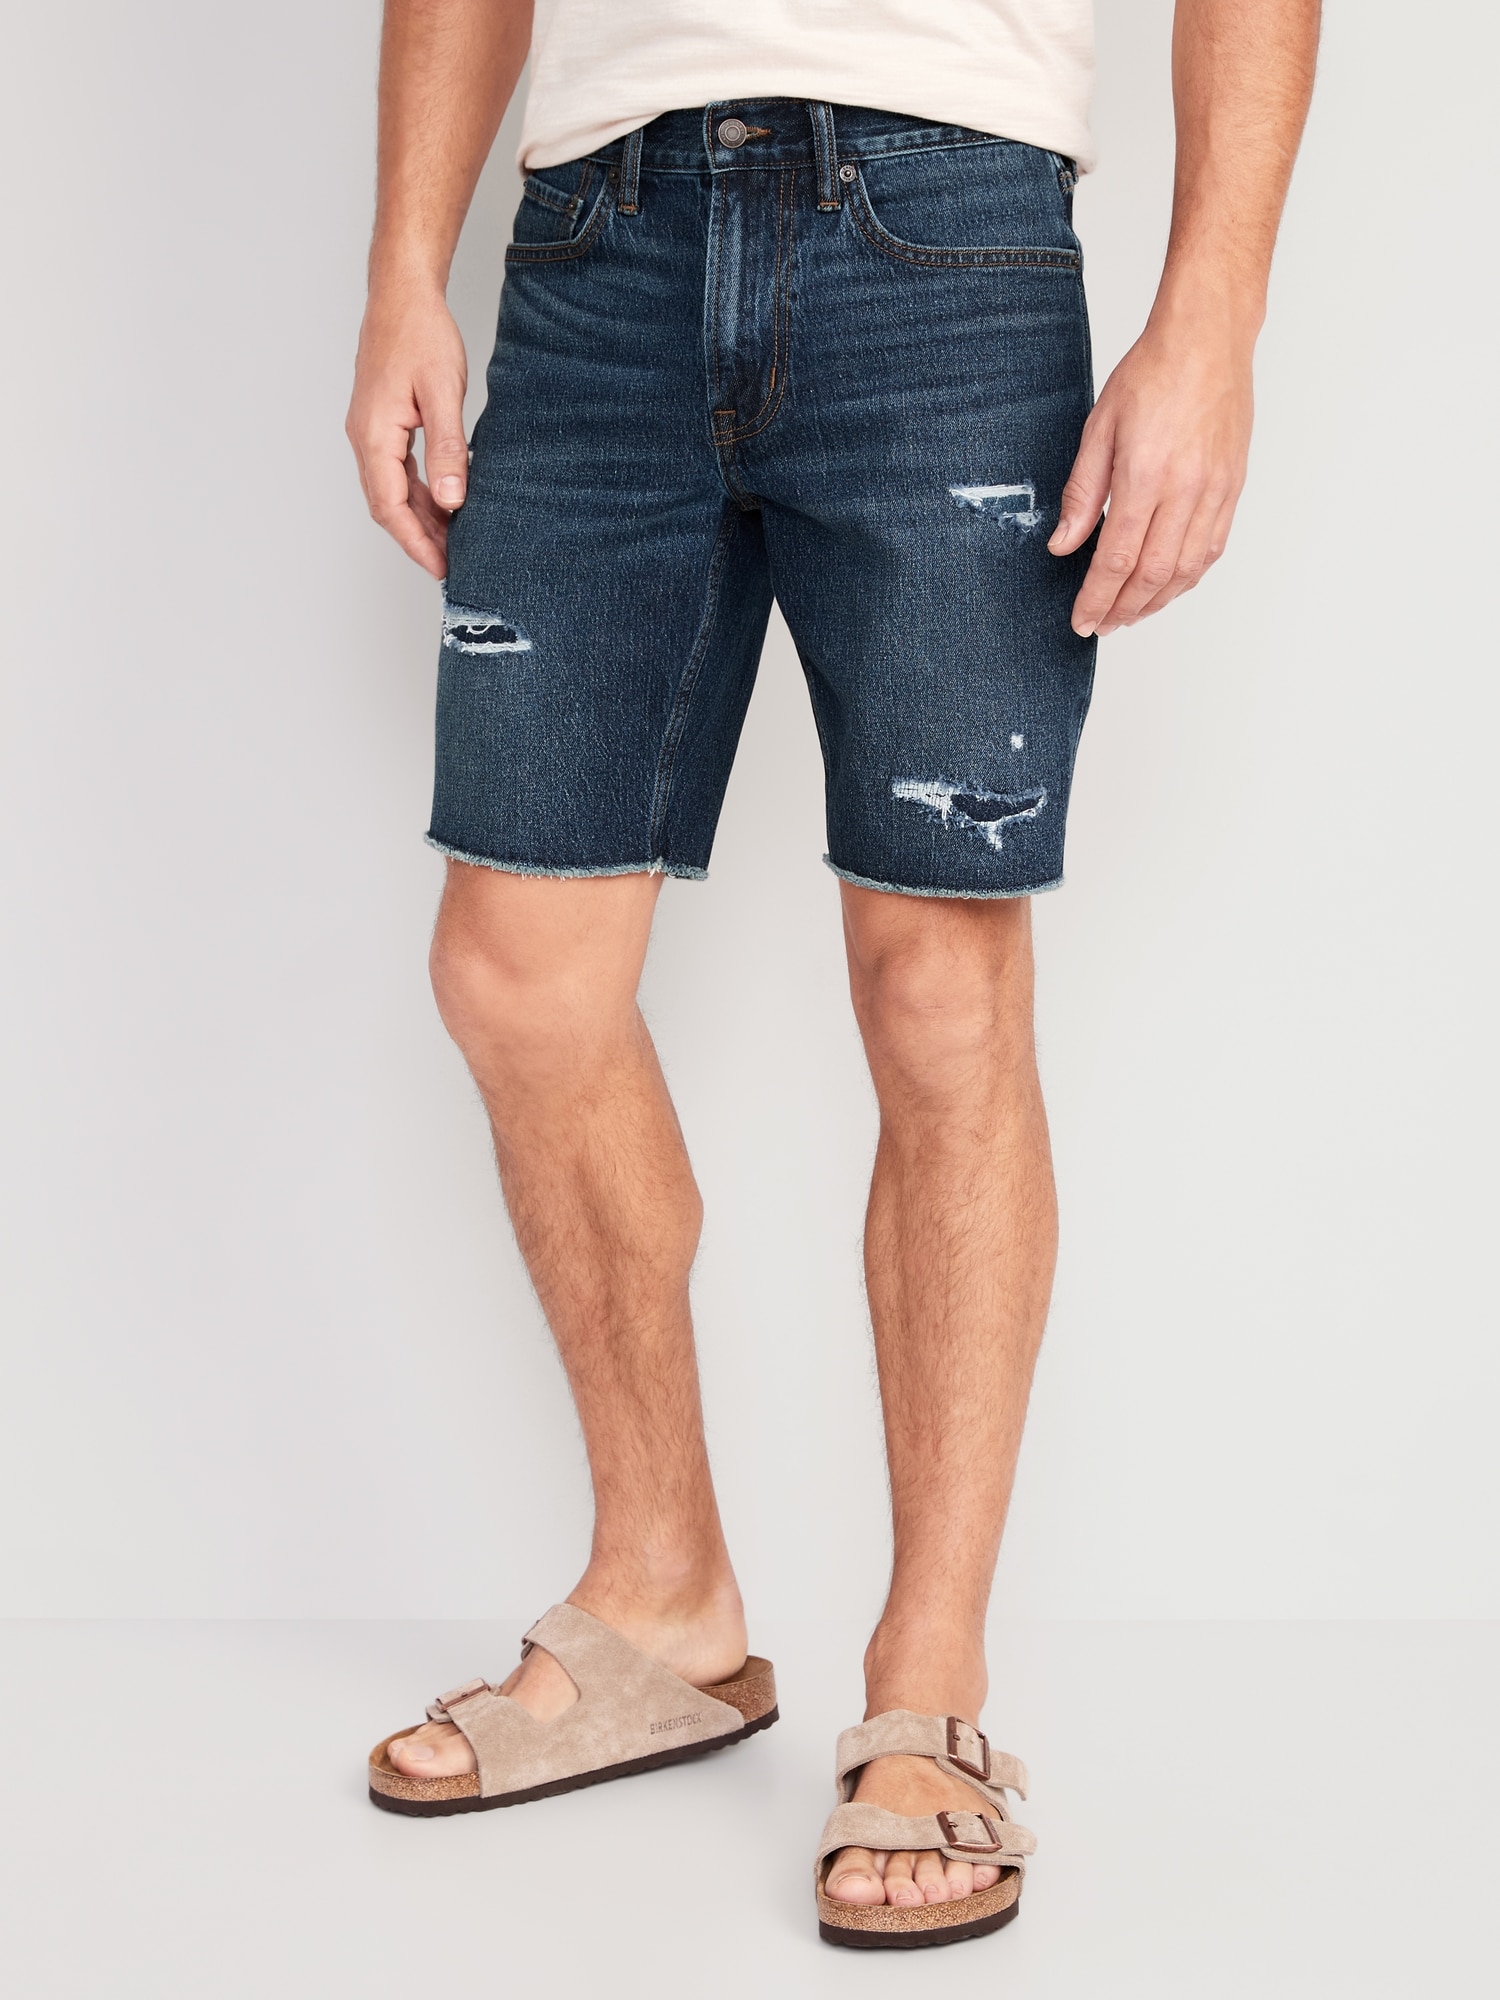 Old Navy Slim Built-In Flex Cut-Off Jean Shorts for Men -- 9.5-inch inseam blue. 1